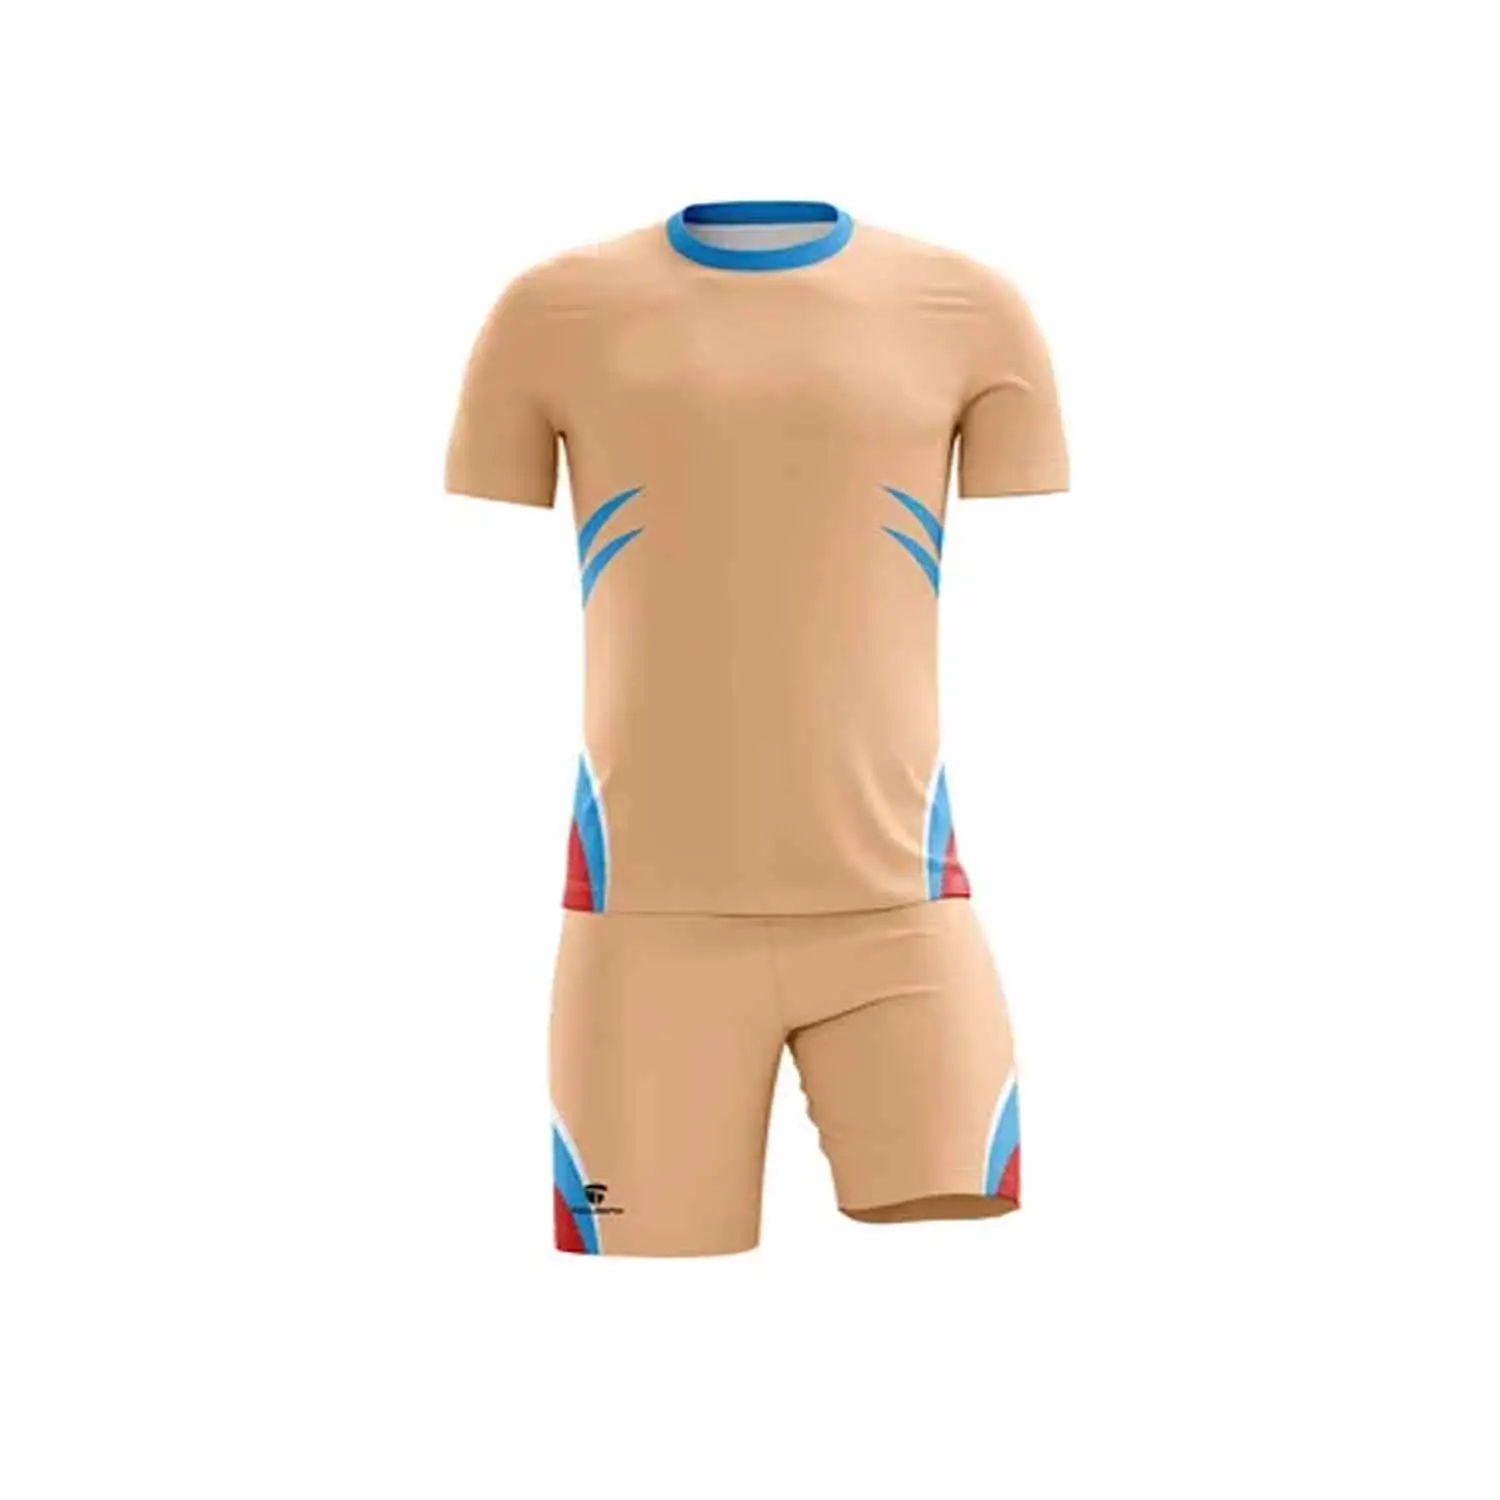 New Polyester Mesh Material Custom Team Fußball uniform/Maßge schneiderte hochwertige Fußball uniform mit Baseball Jersey Short